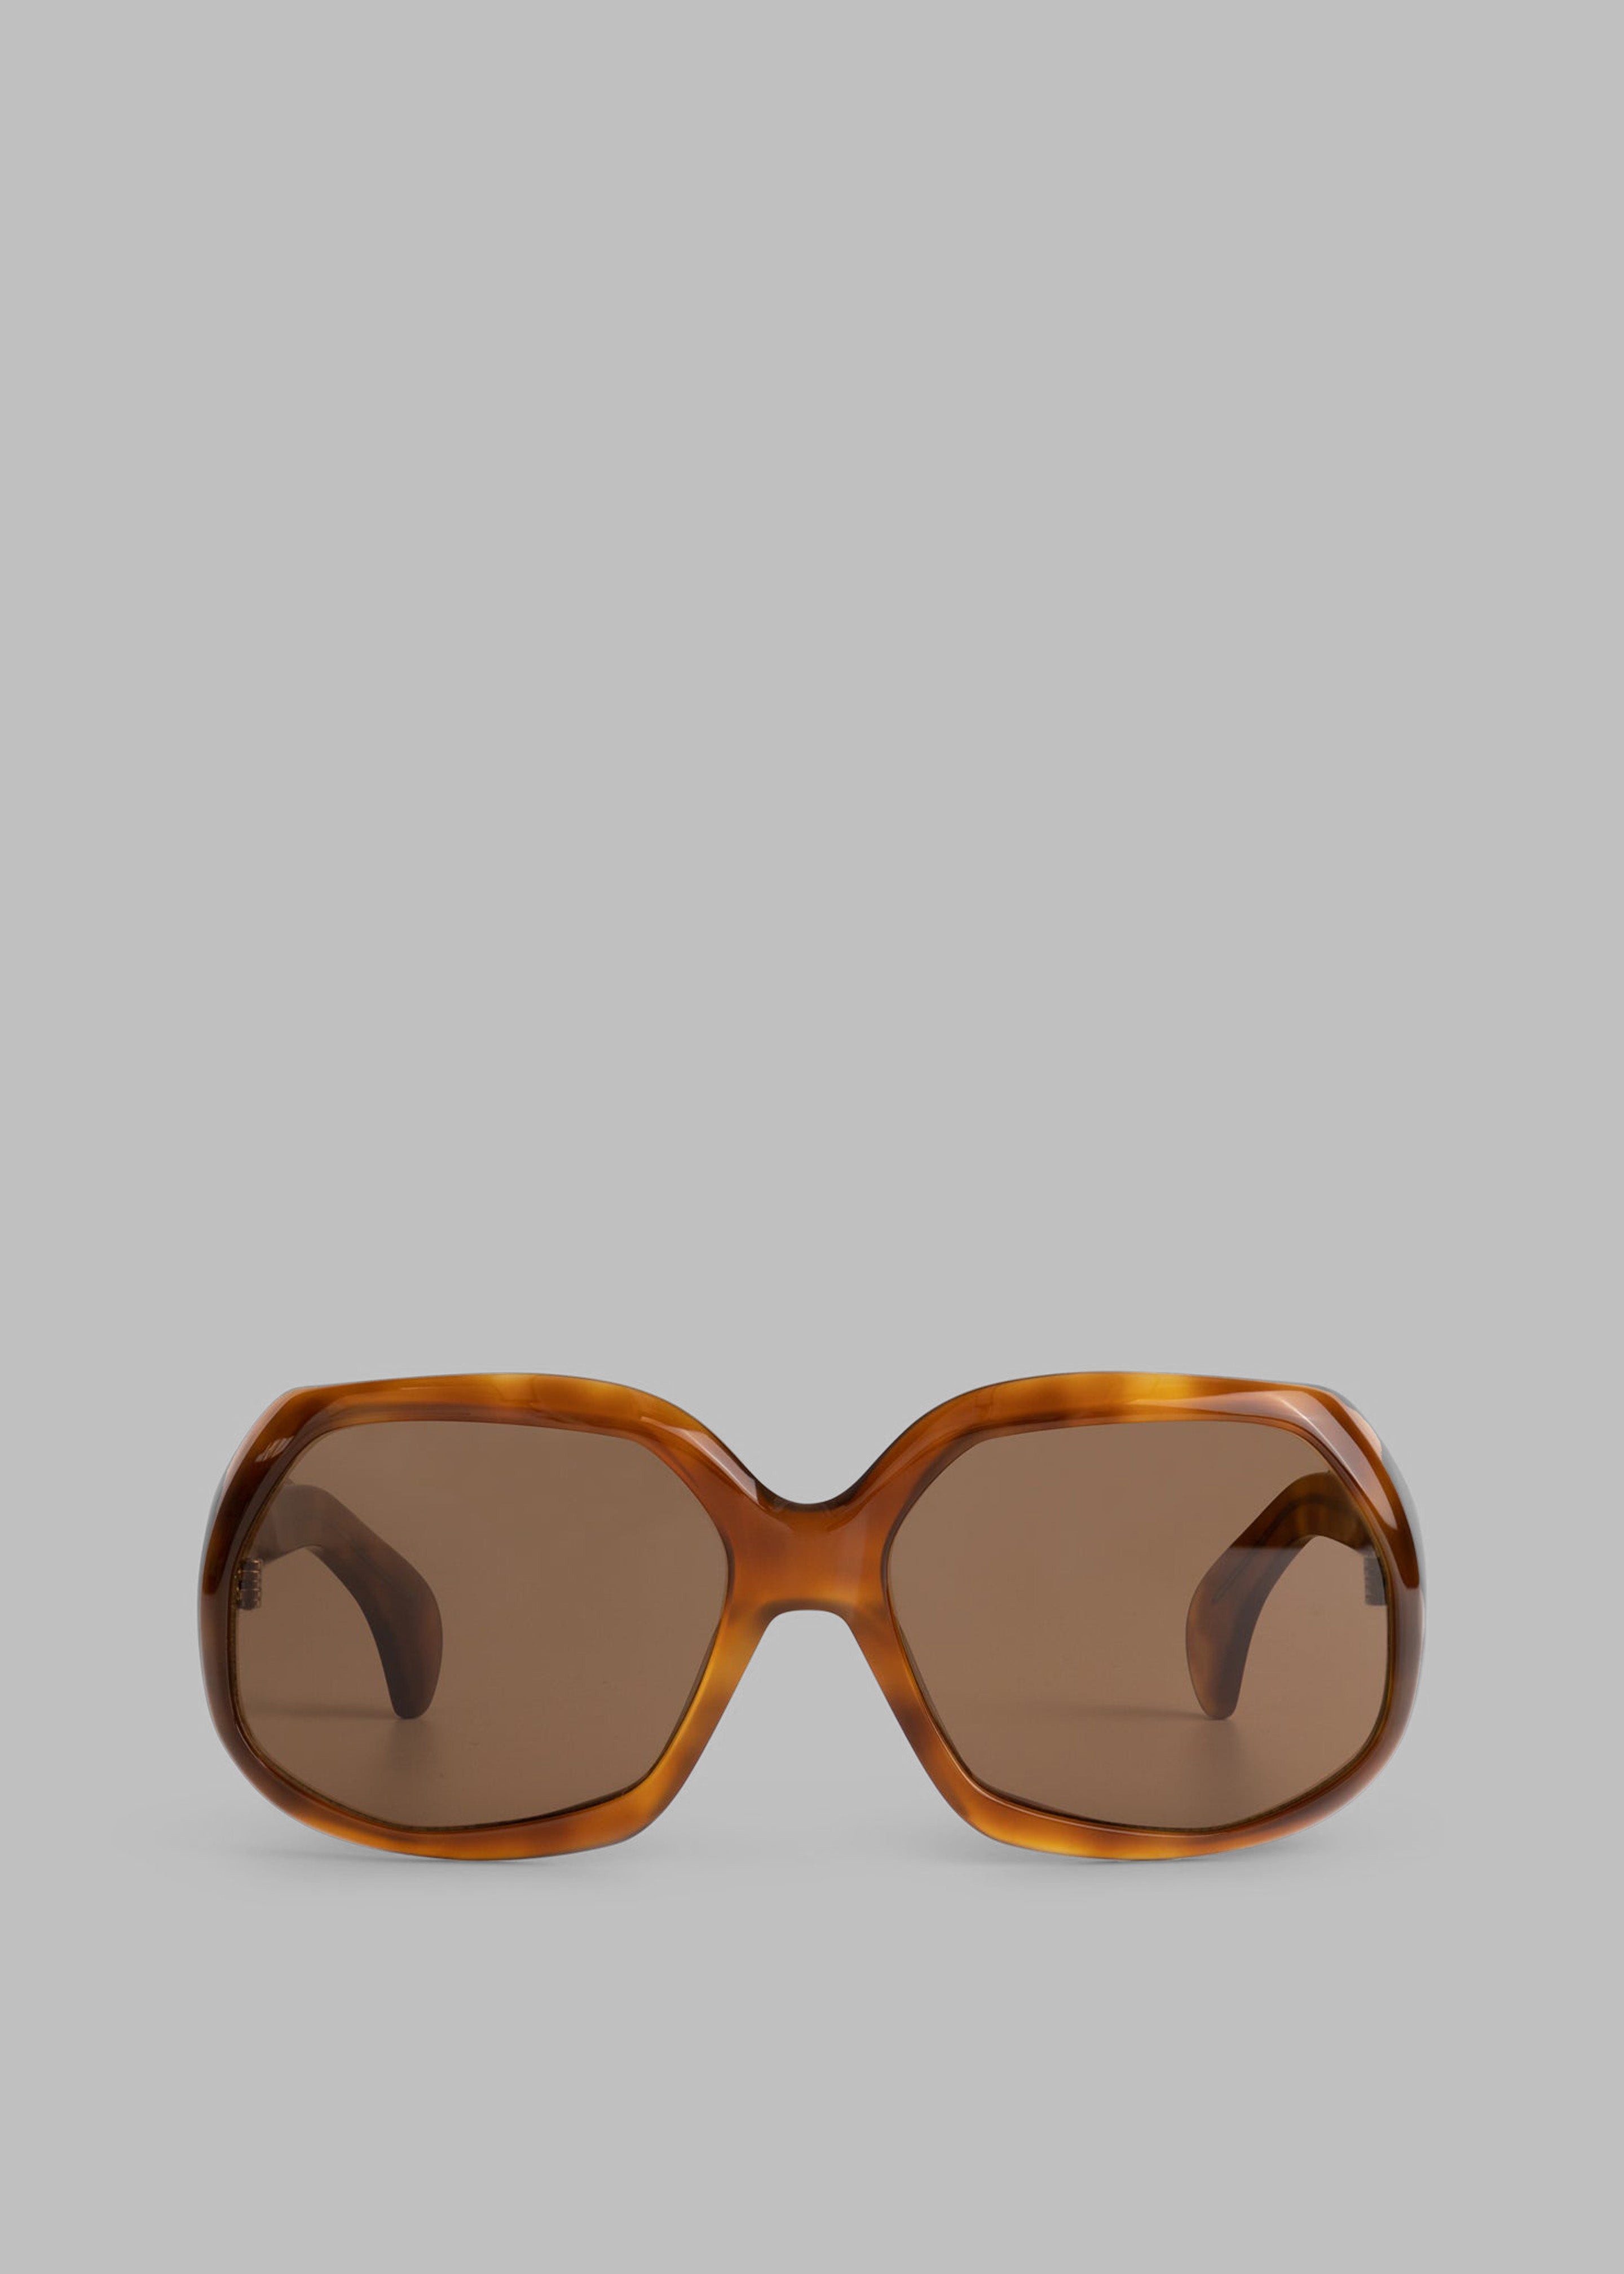 Port Tanger Yamina Sunglasses - Oliban Acetate Tobacco Lens - 3